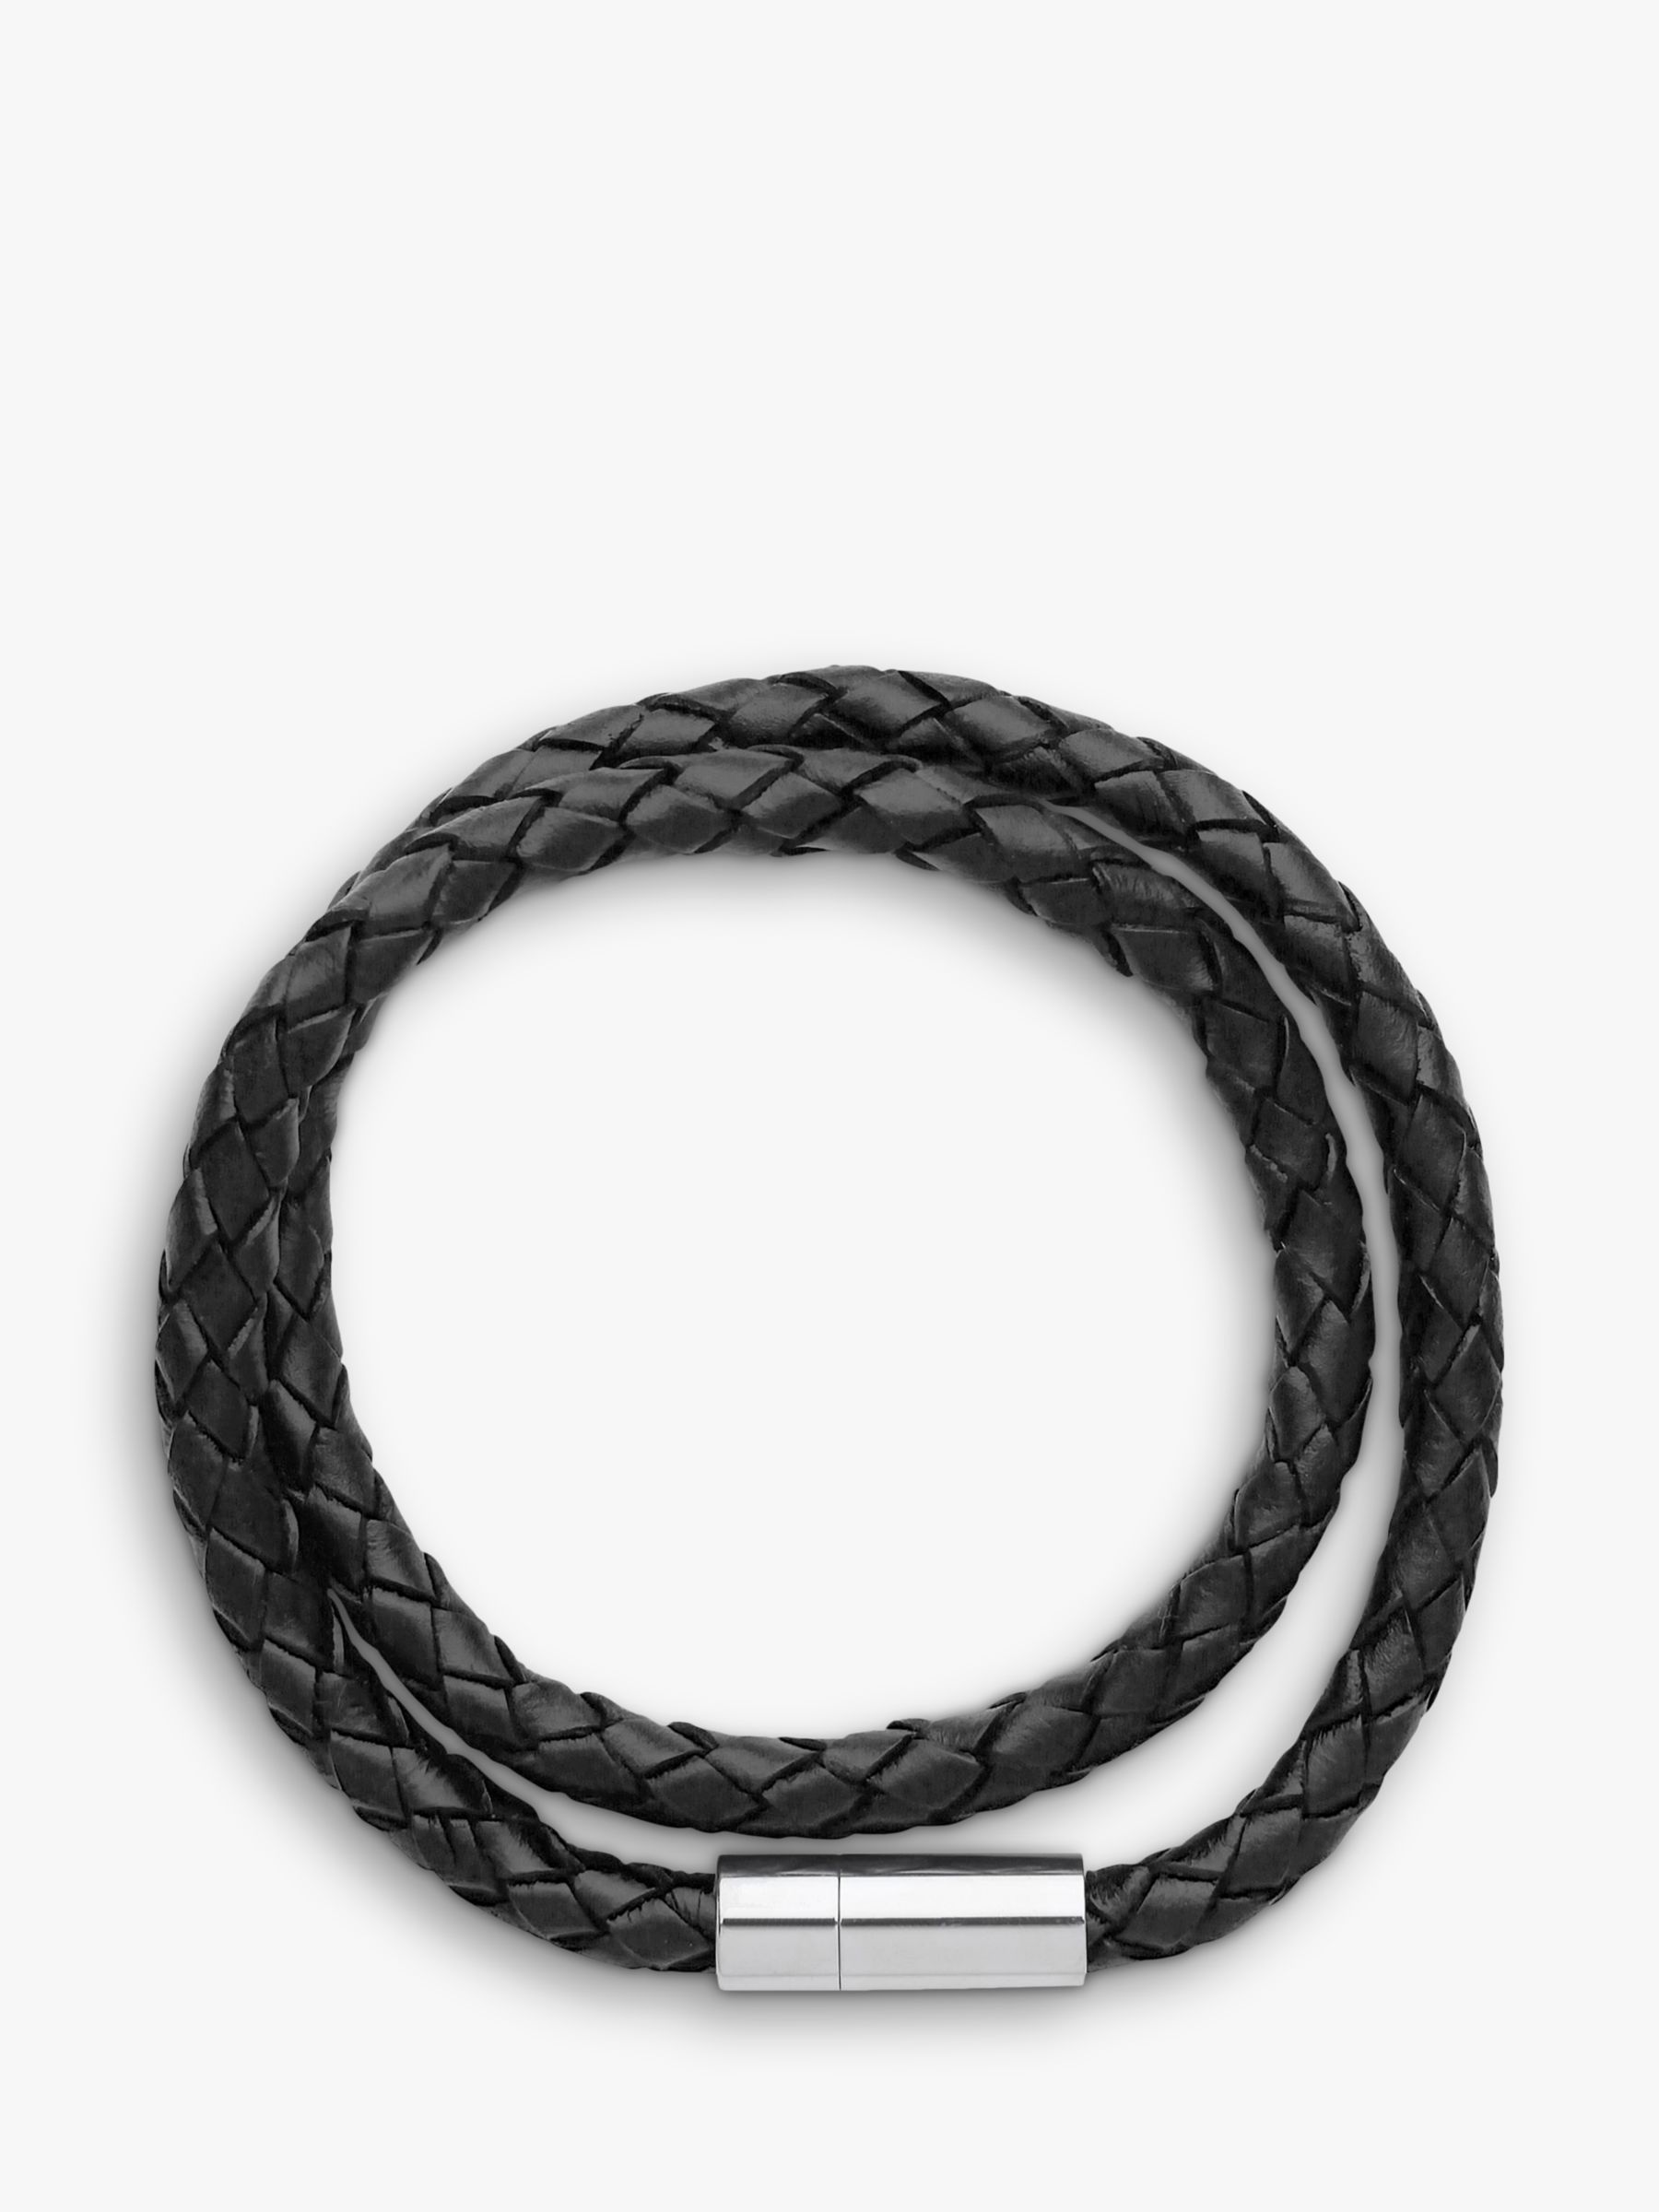 BARTLETT LONDON Men's Woven Leather Double Wrap Bracelet, Black